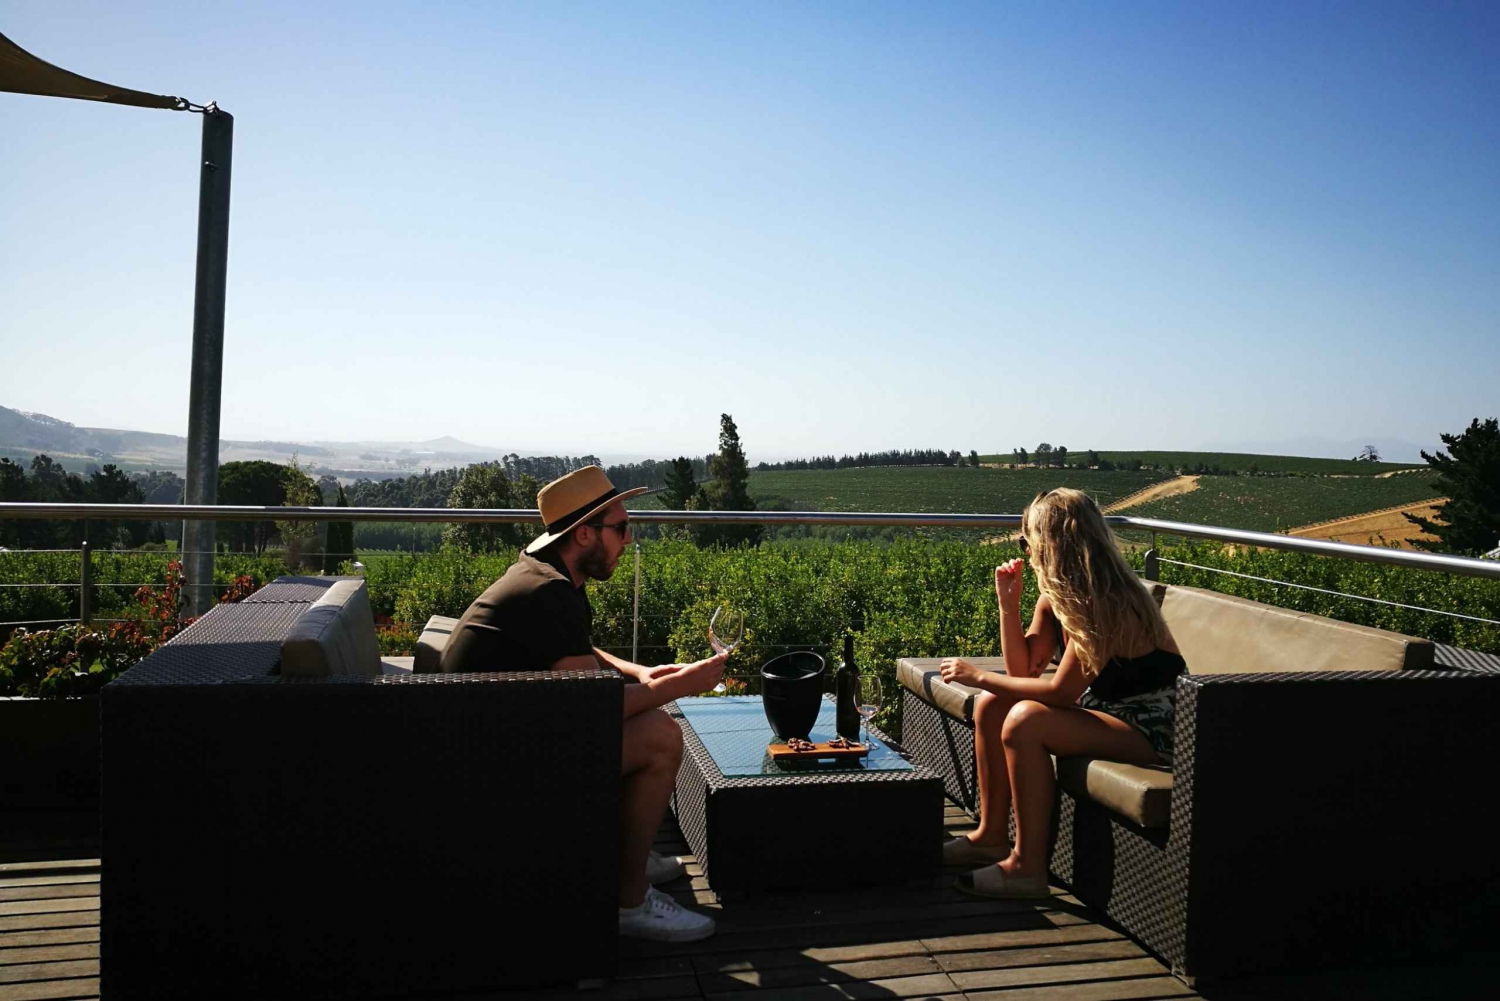 Stellenbosch: Best of the Winelands Private Tour & Tasting